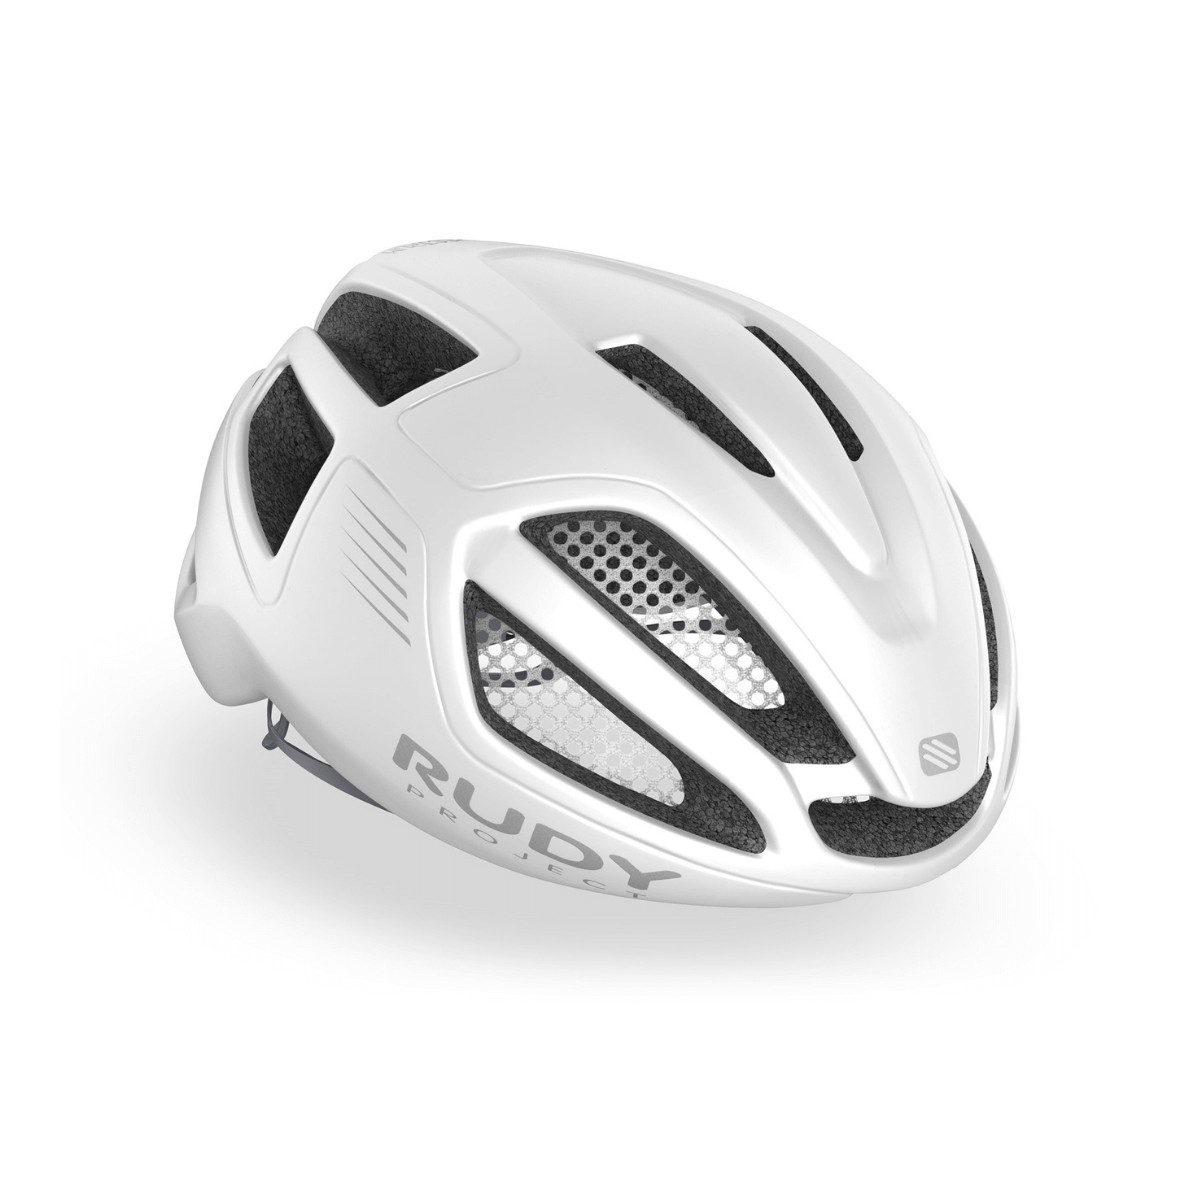 Rudy Project Spectrum Helmet Blanco Matte, Size S